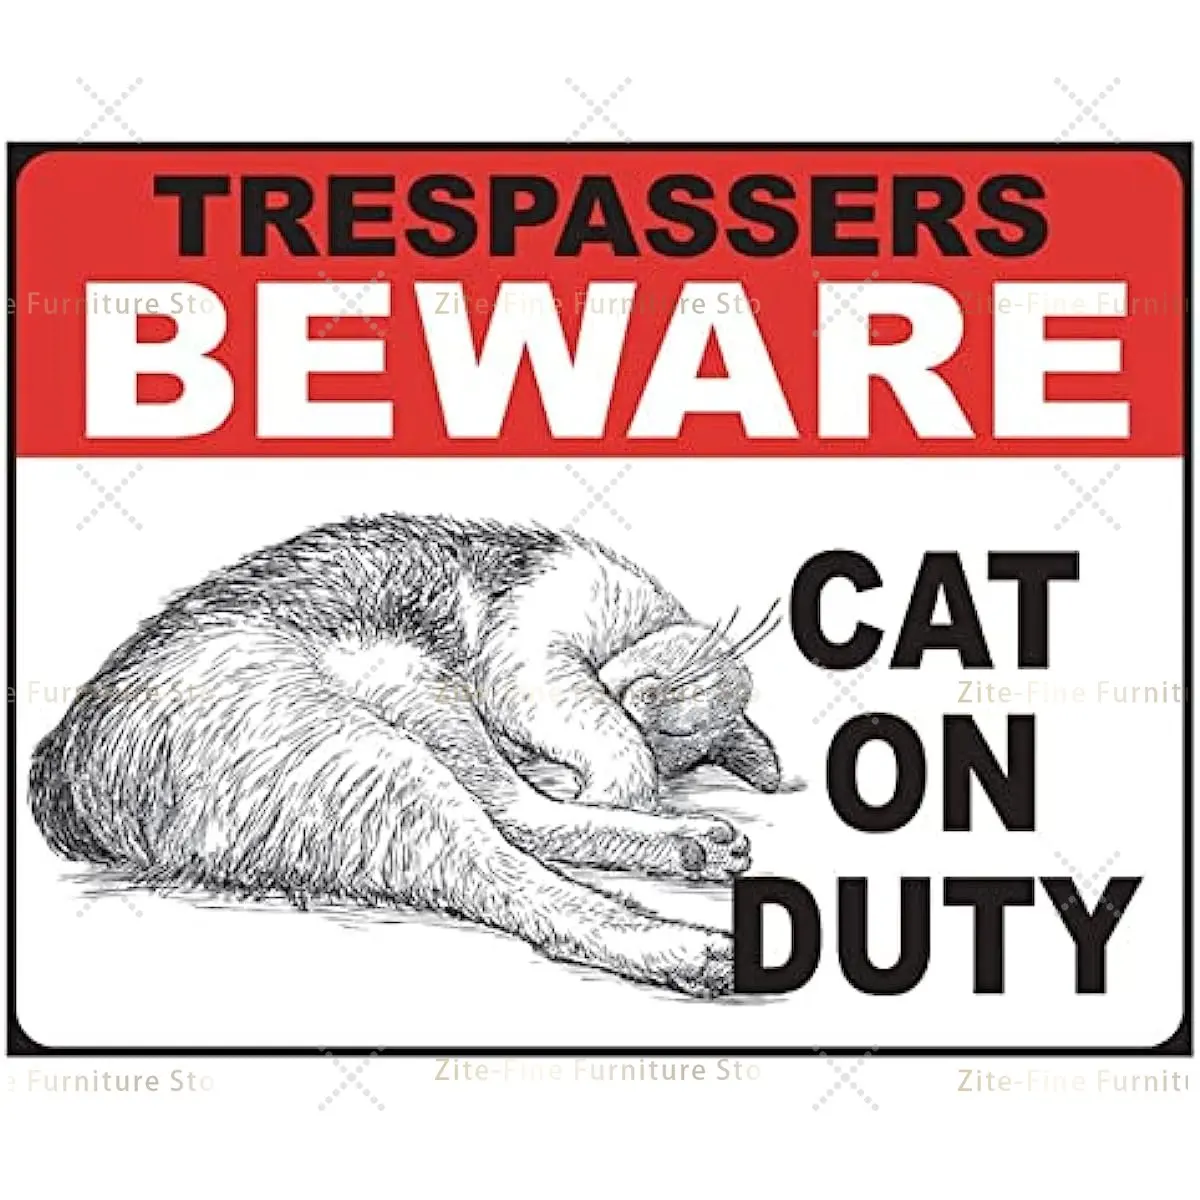 

Desperate Enterprises Beware Cat On Duty Tin Sign - Nostalgic Vintage Metal Wall Decor - 8x12inch